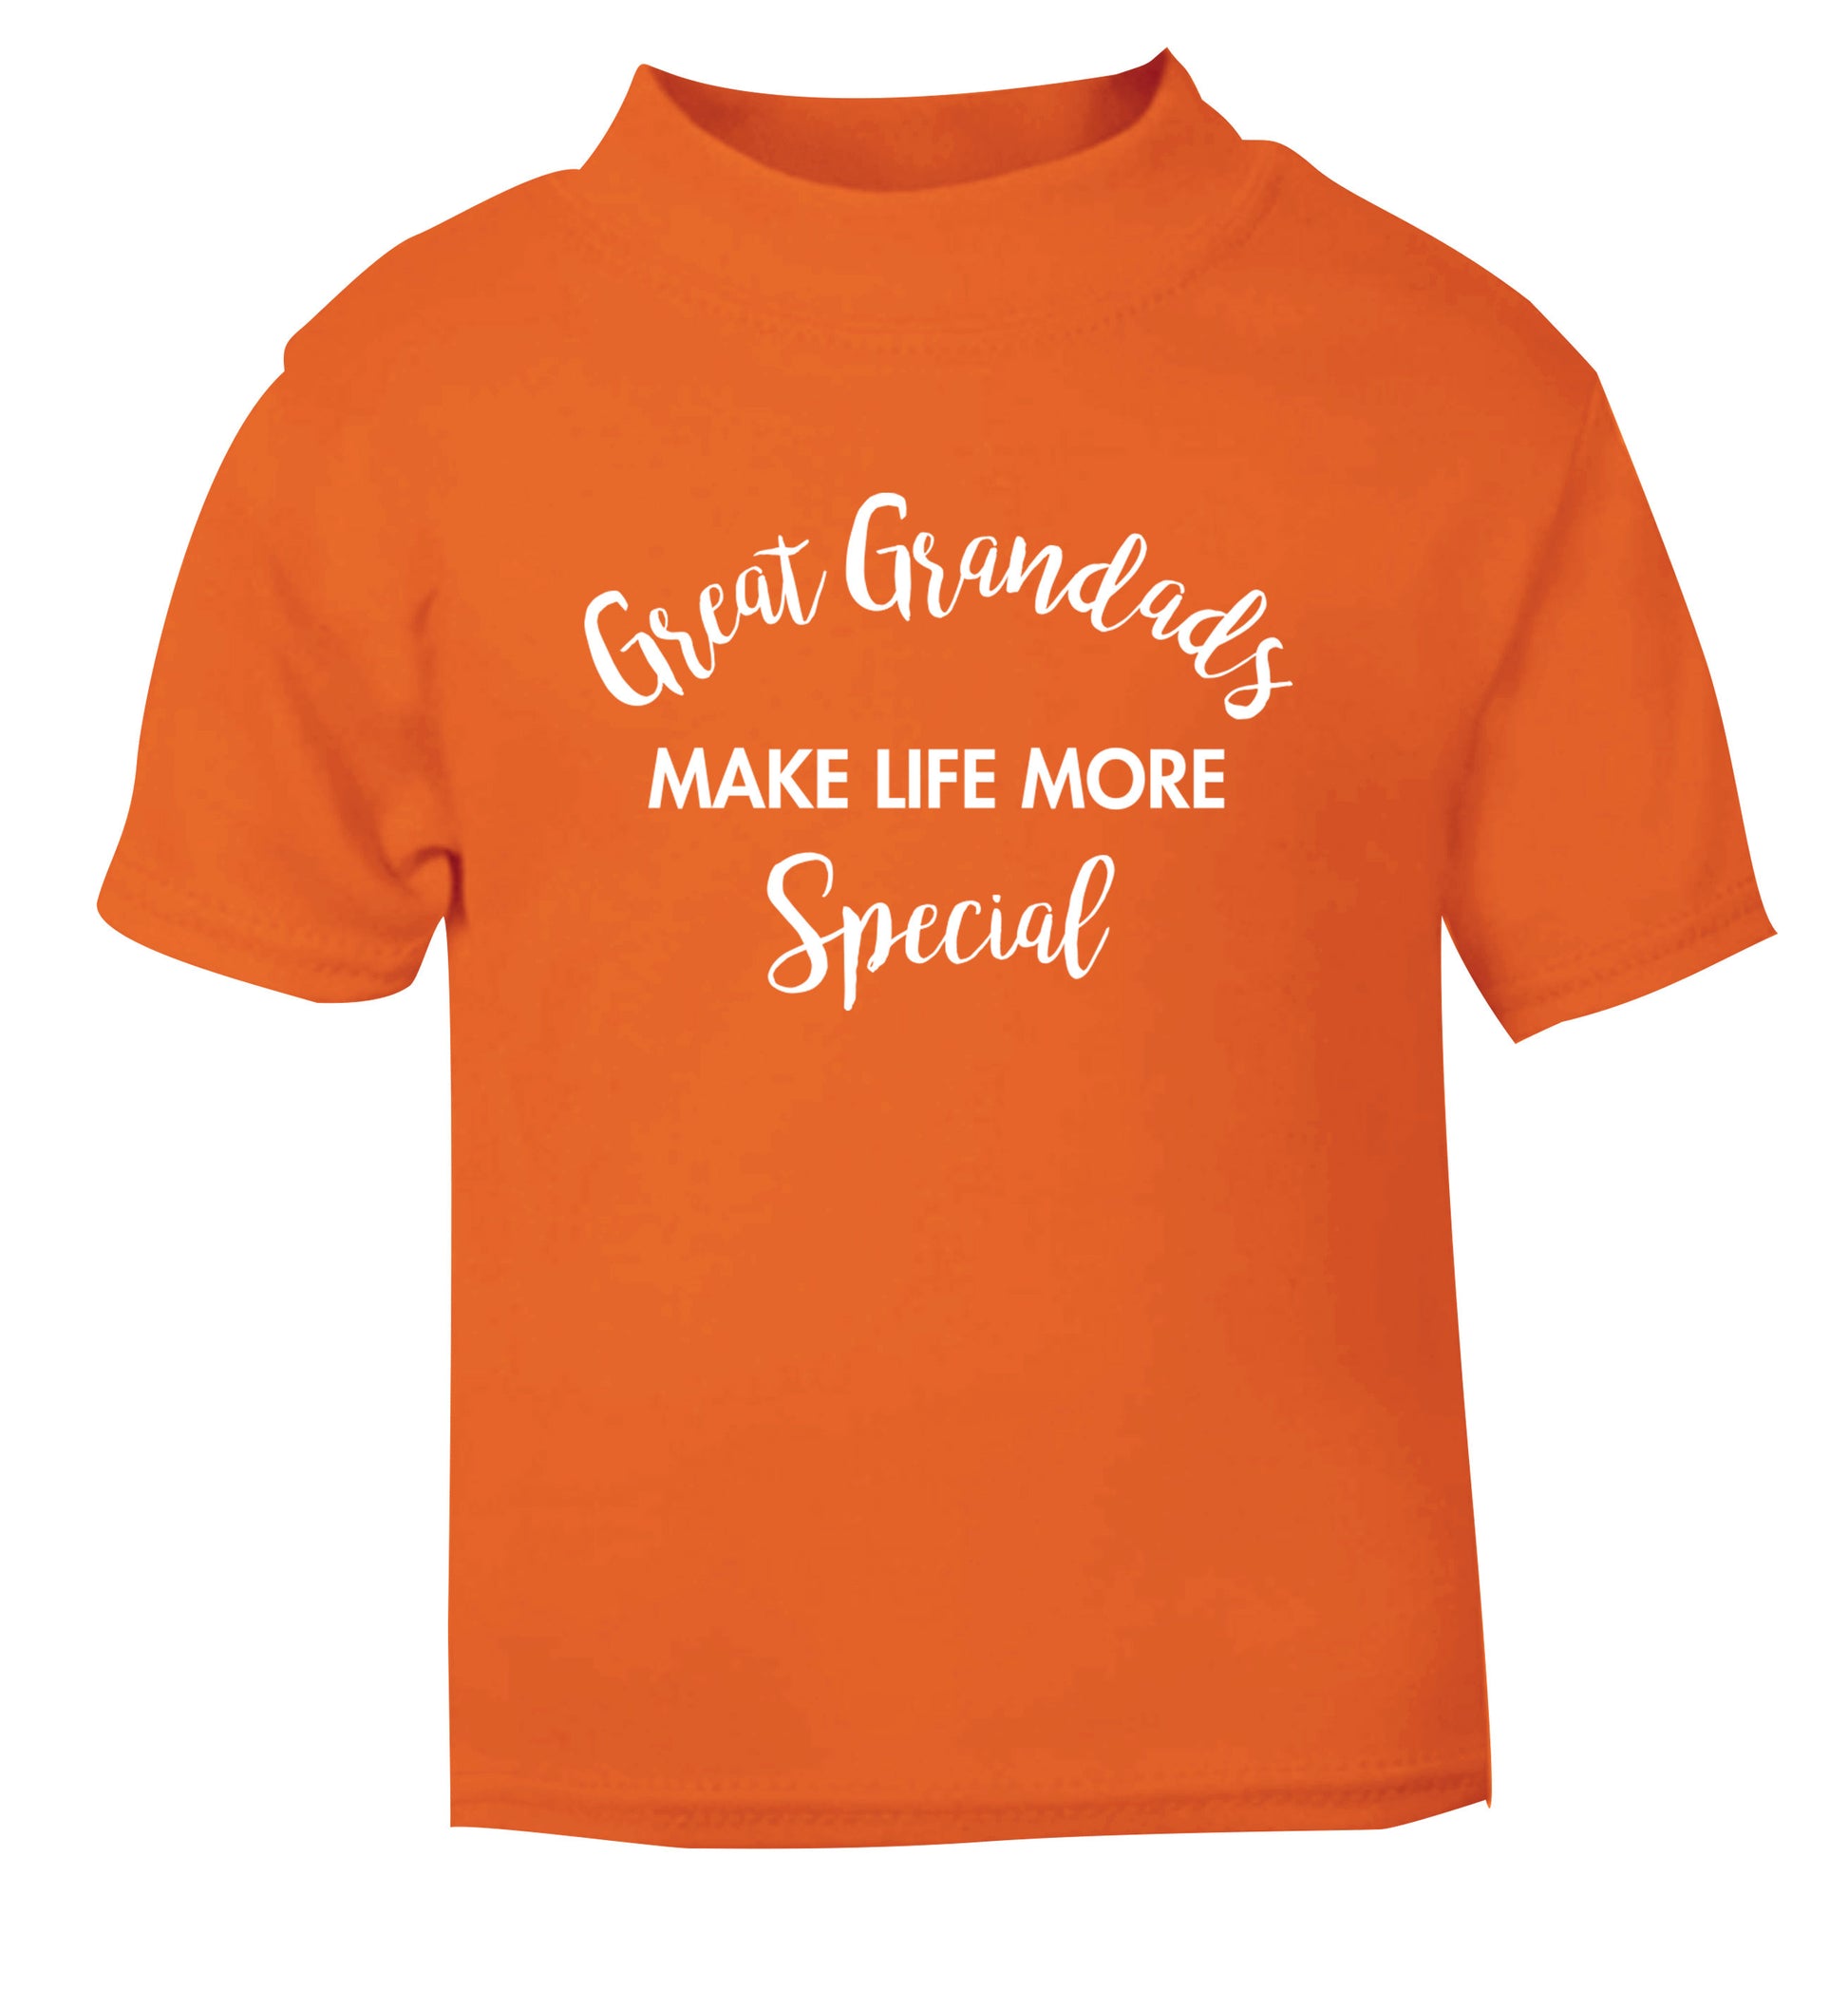 Great Grandads make life more special orange Baby Toddler Tshirt 2 Years